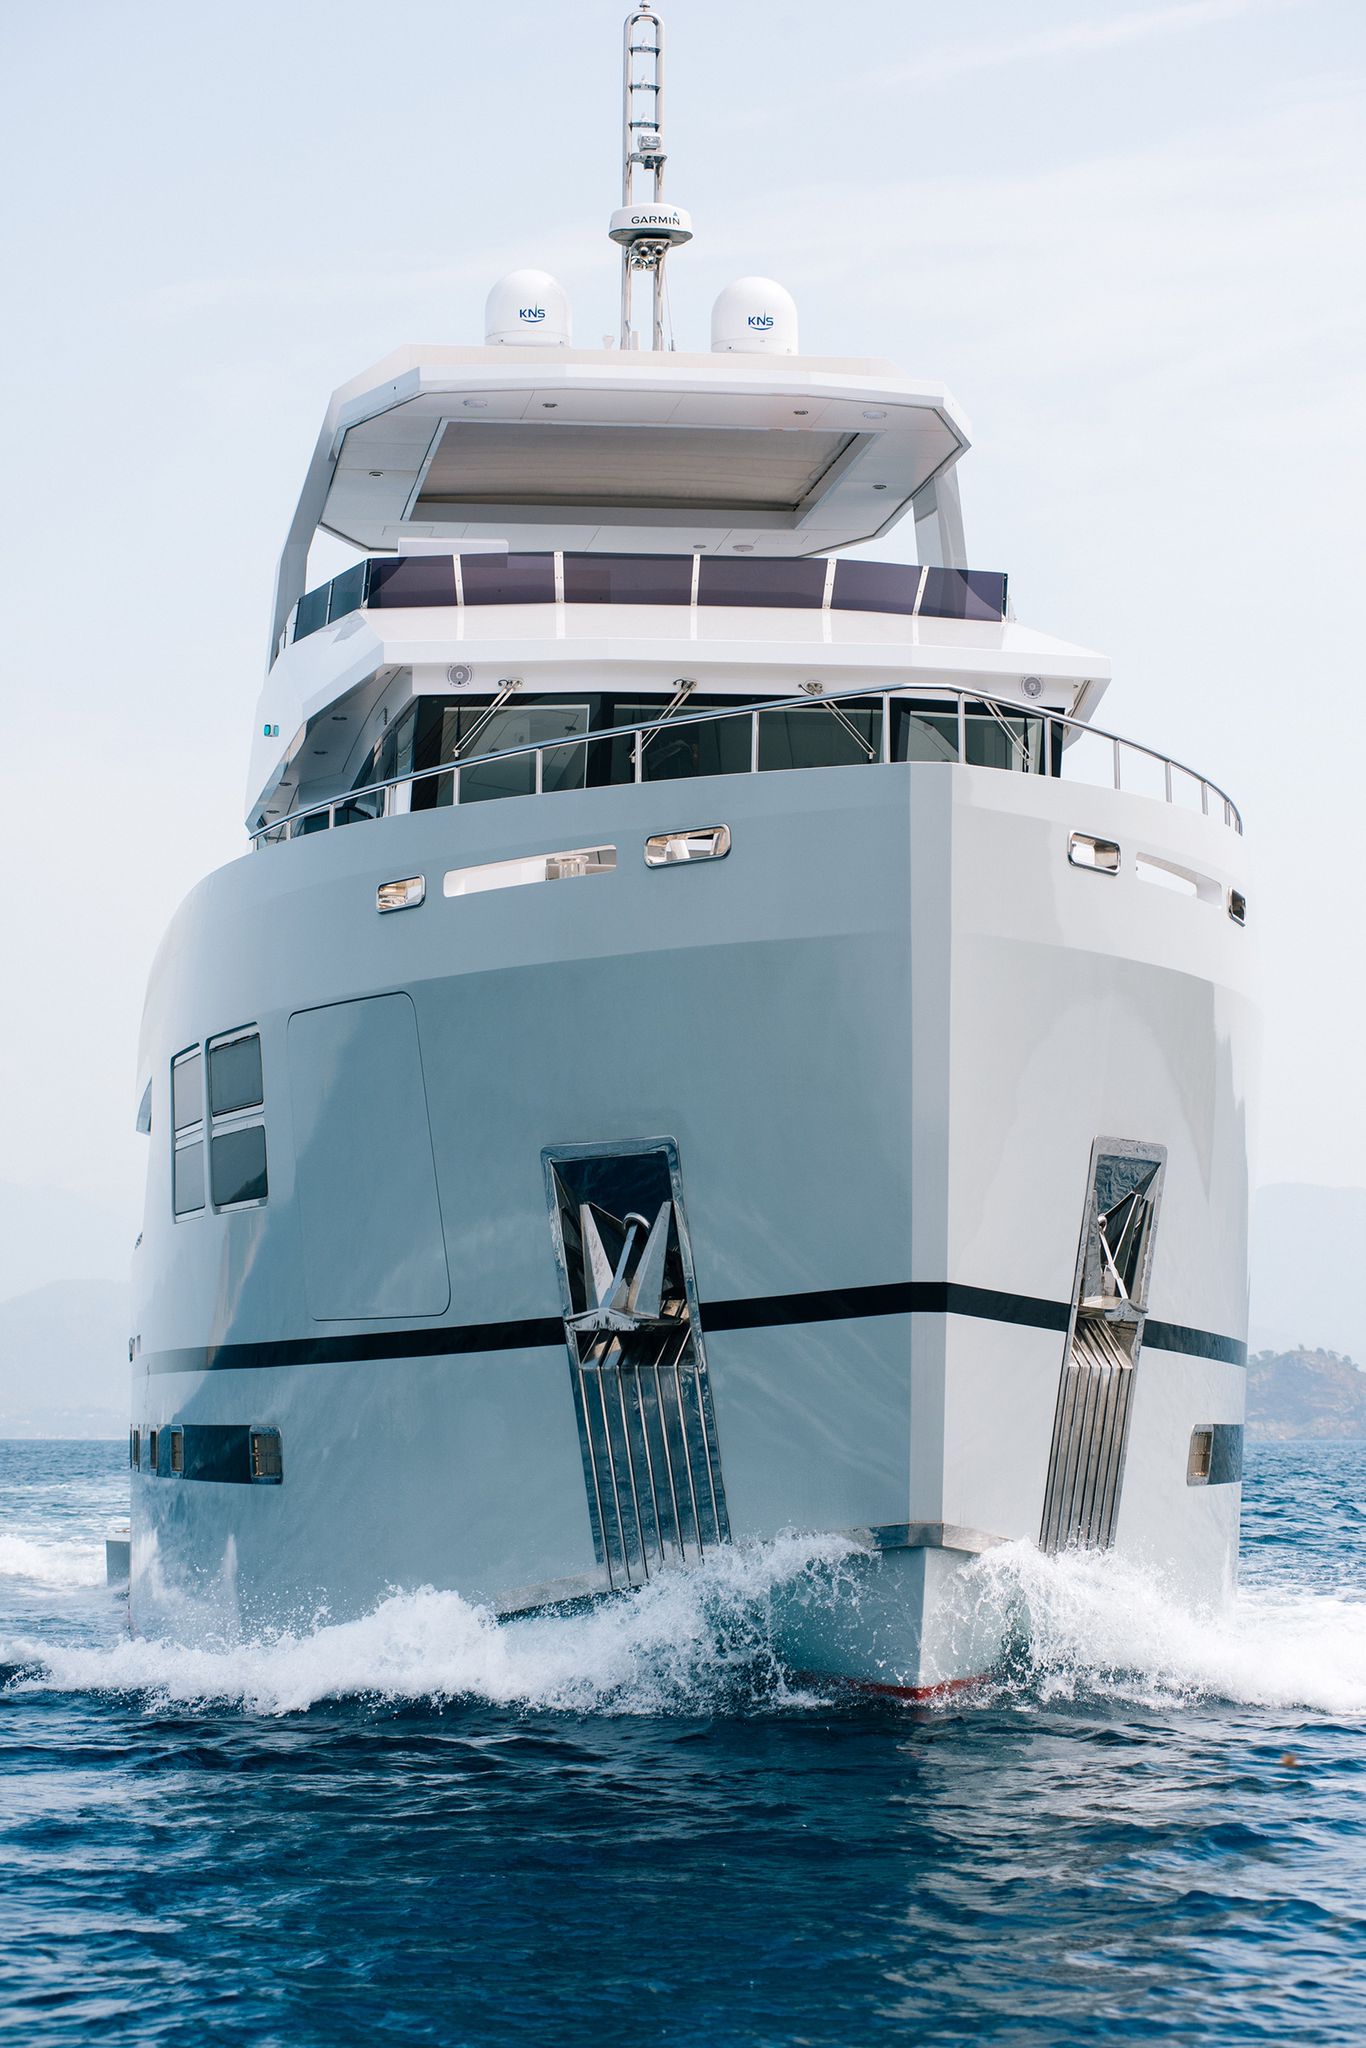 sieckmann yachts custom yacht big joy